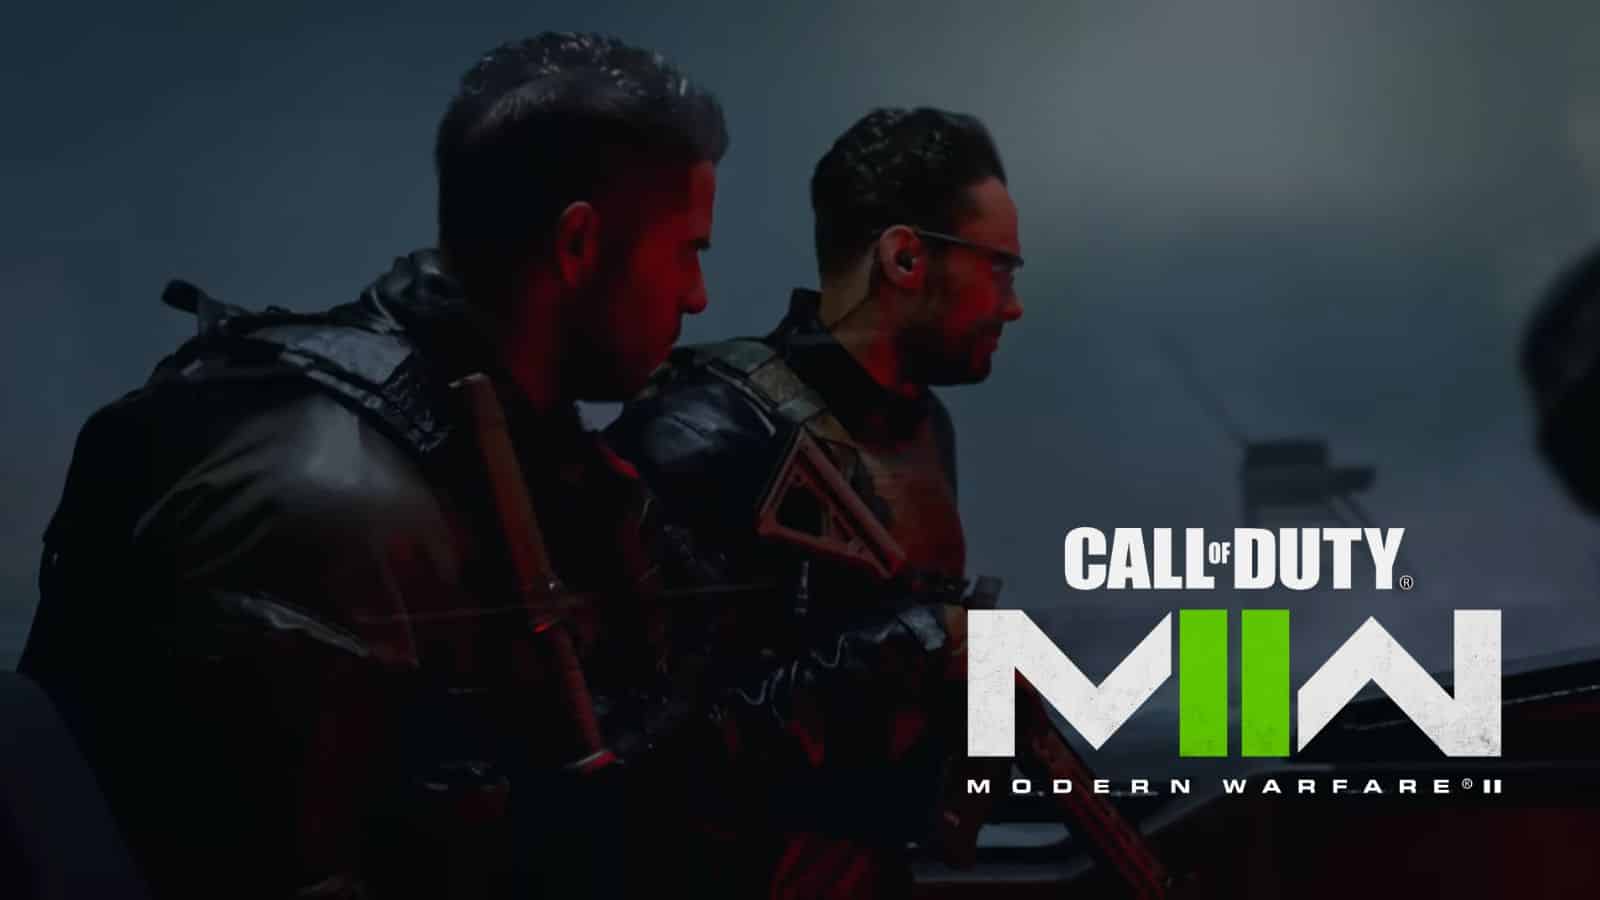 Call Of Duty: Modern Warfare 2 Steam reviews finally tip into